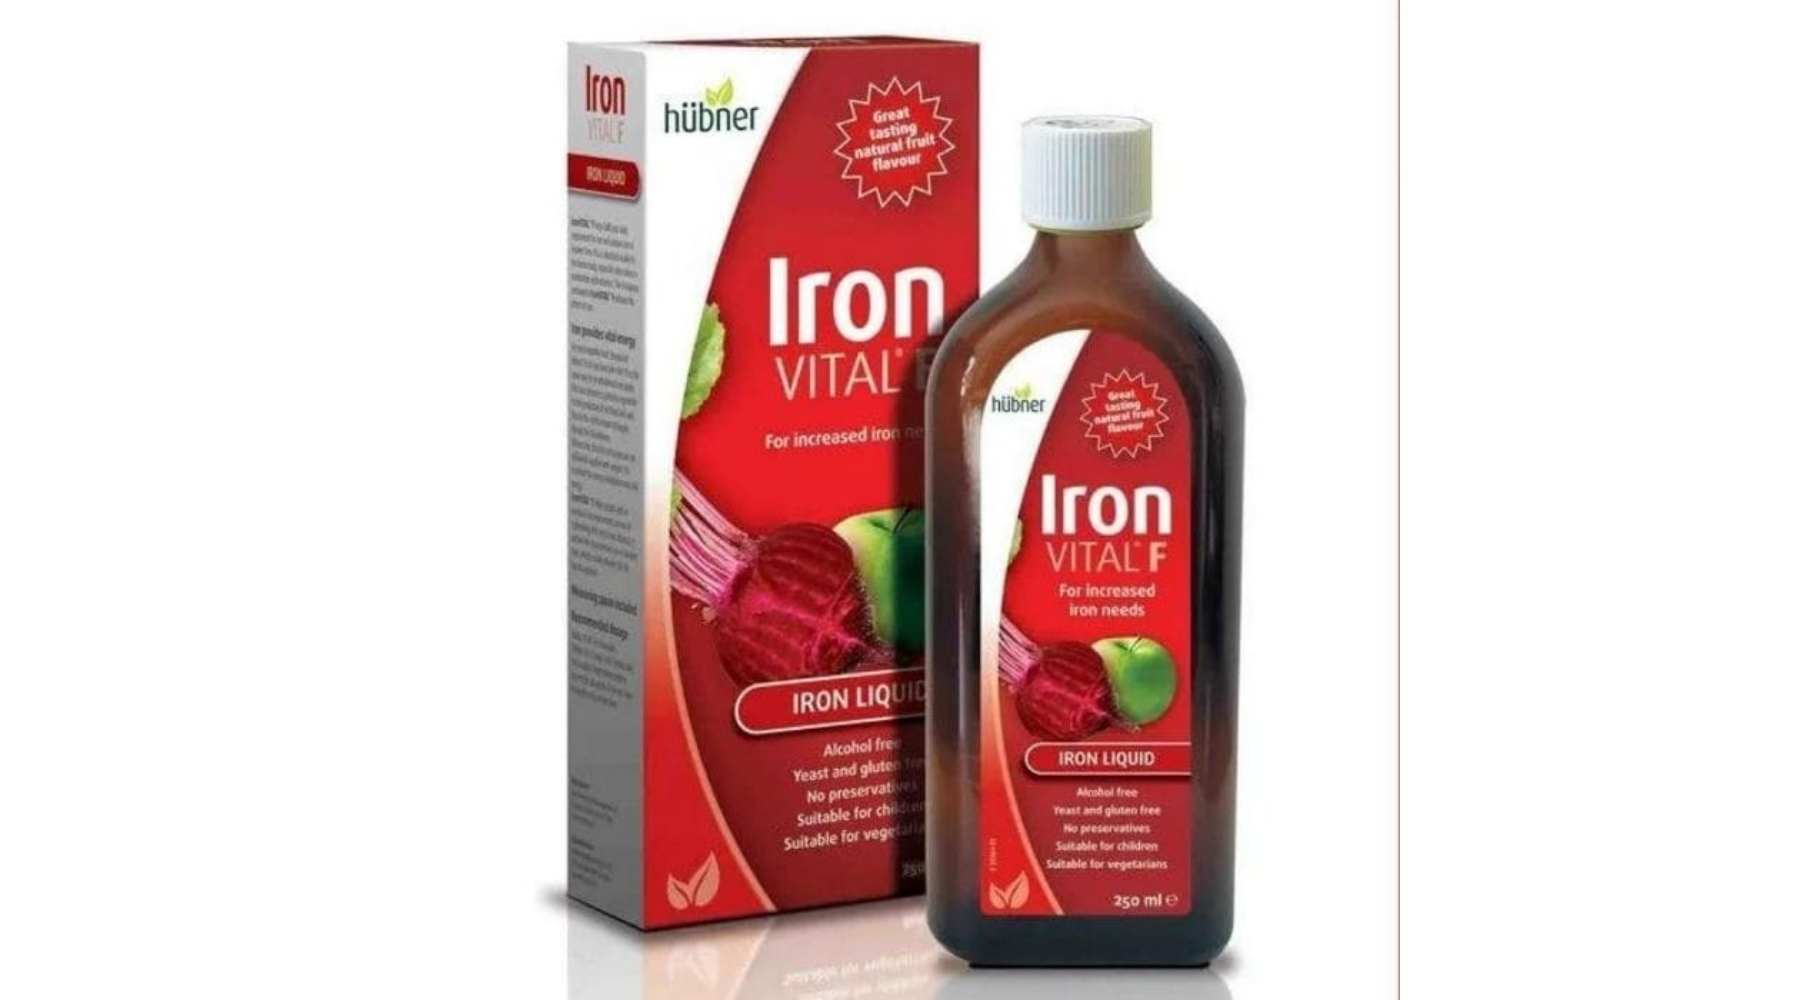 Hubner - Iron Vital F Tonic, 250ml